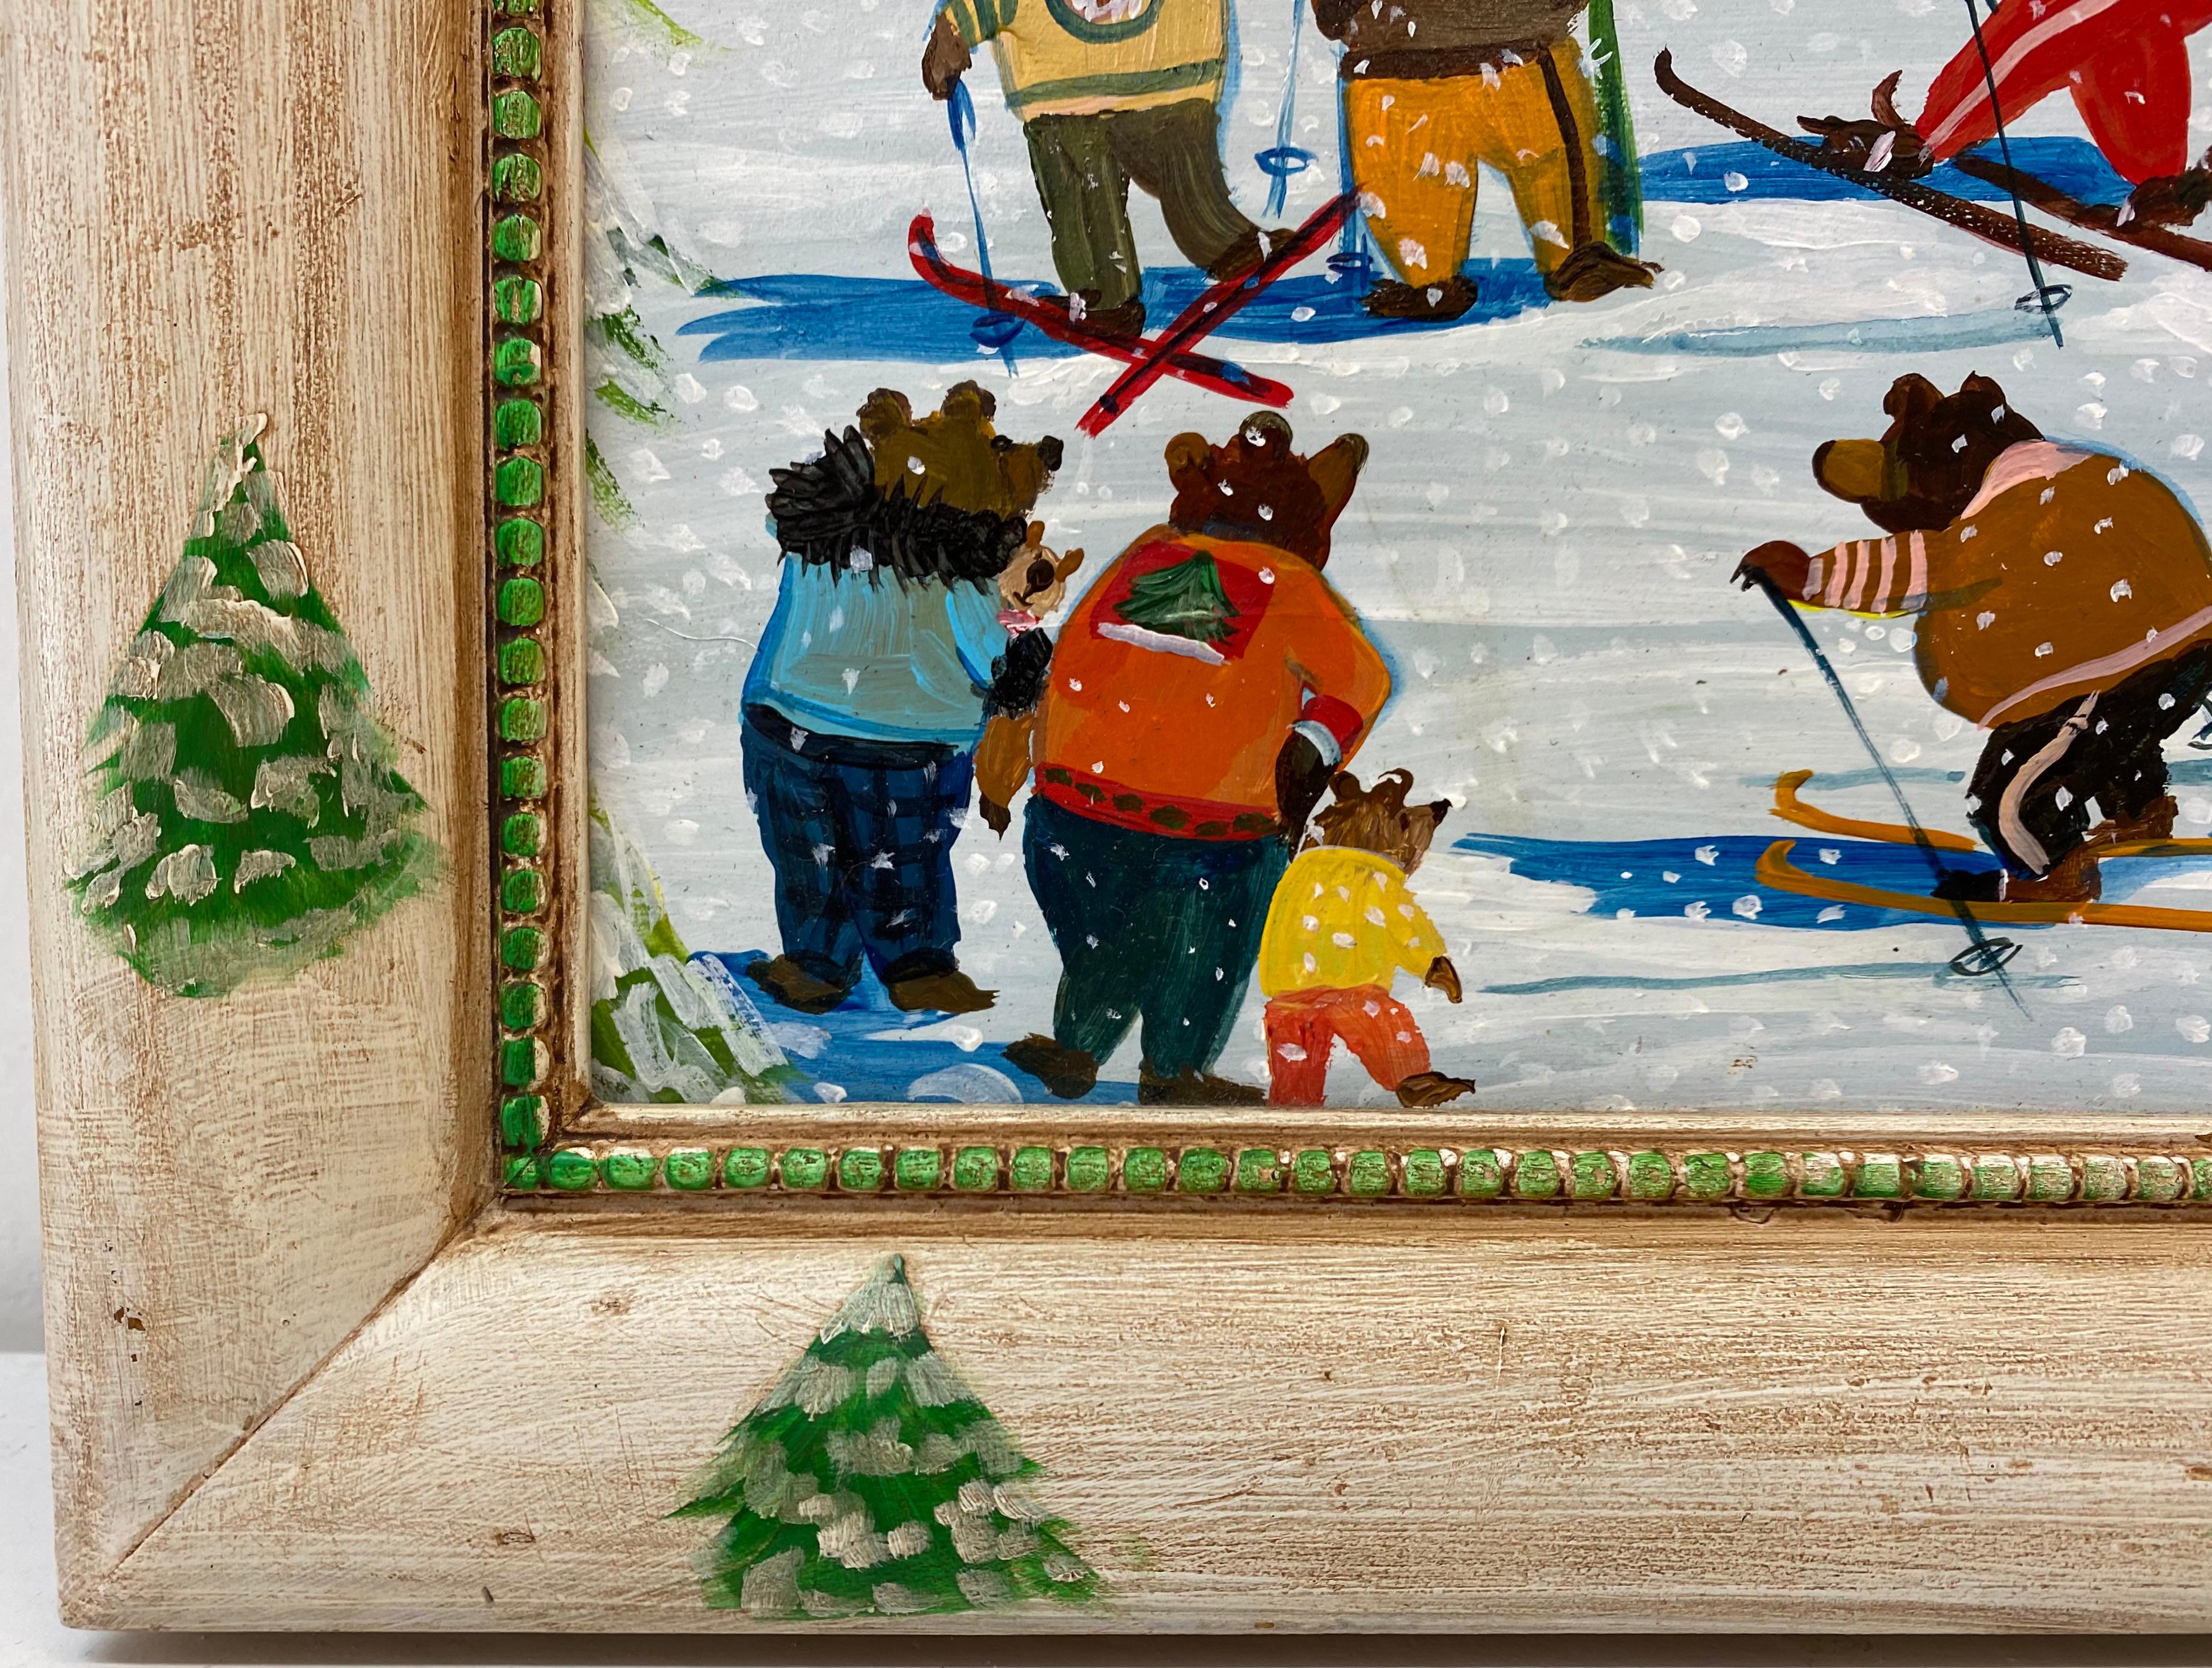 Vintage Folk Art Bears on the Slopes Original Oil Painting 20th C.

Original oil on panel

Dimensions 11.5